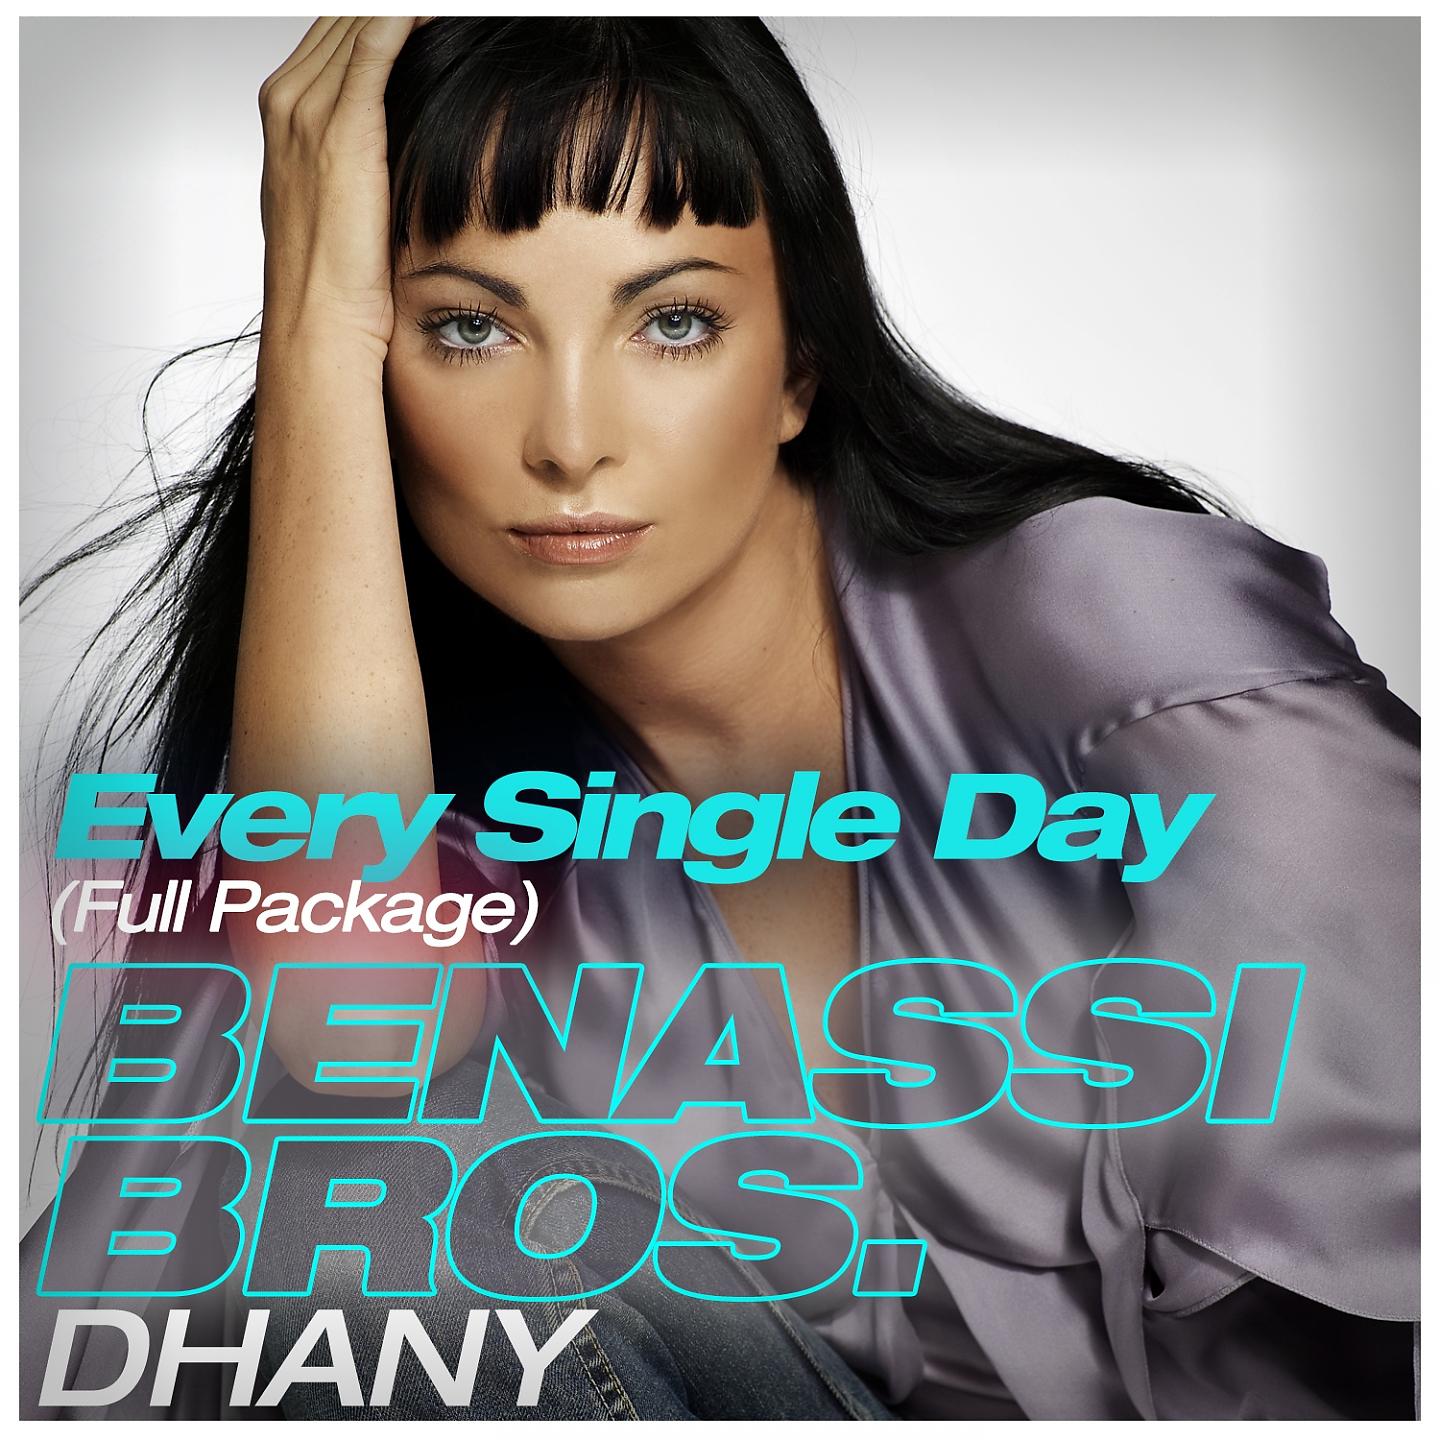 Single day benny. Dhany певица 2022. Benassi Bros Dhany. Dhany итальянская певица. Dhany Benny Benassi.